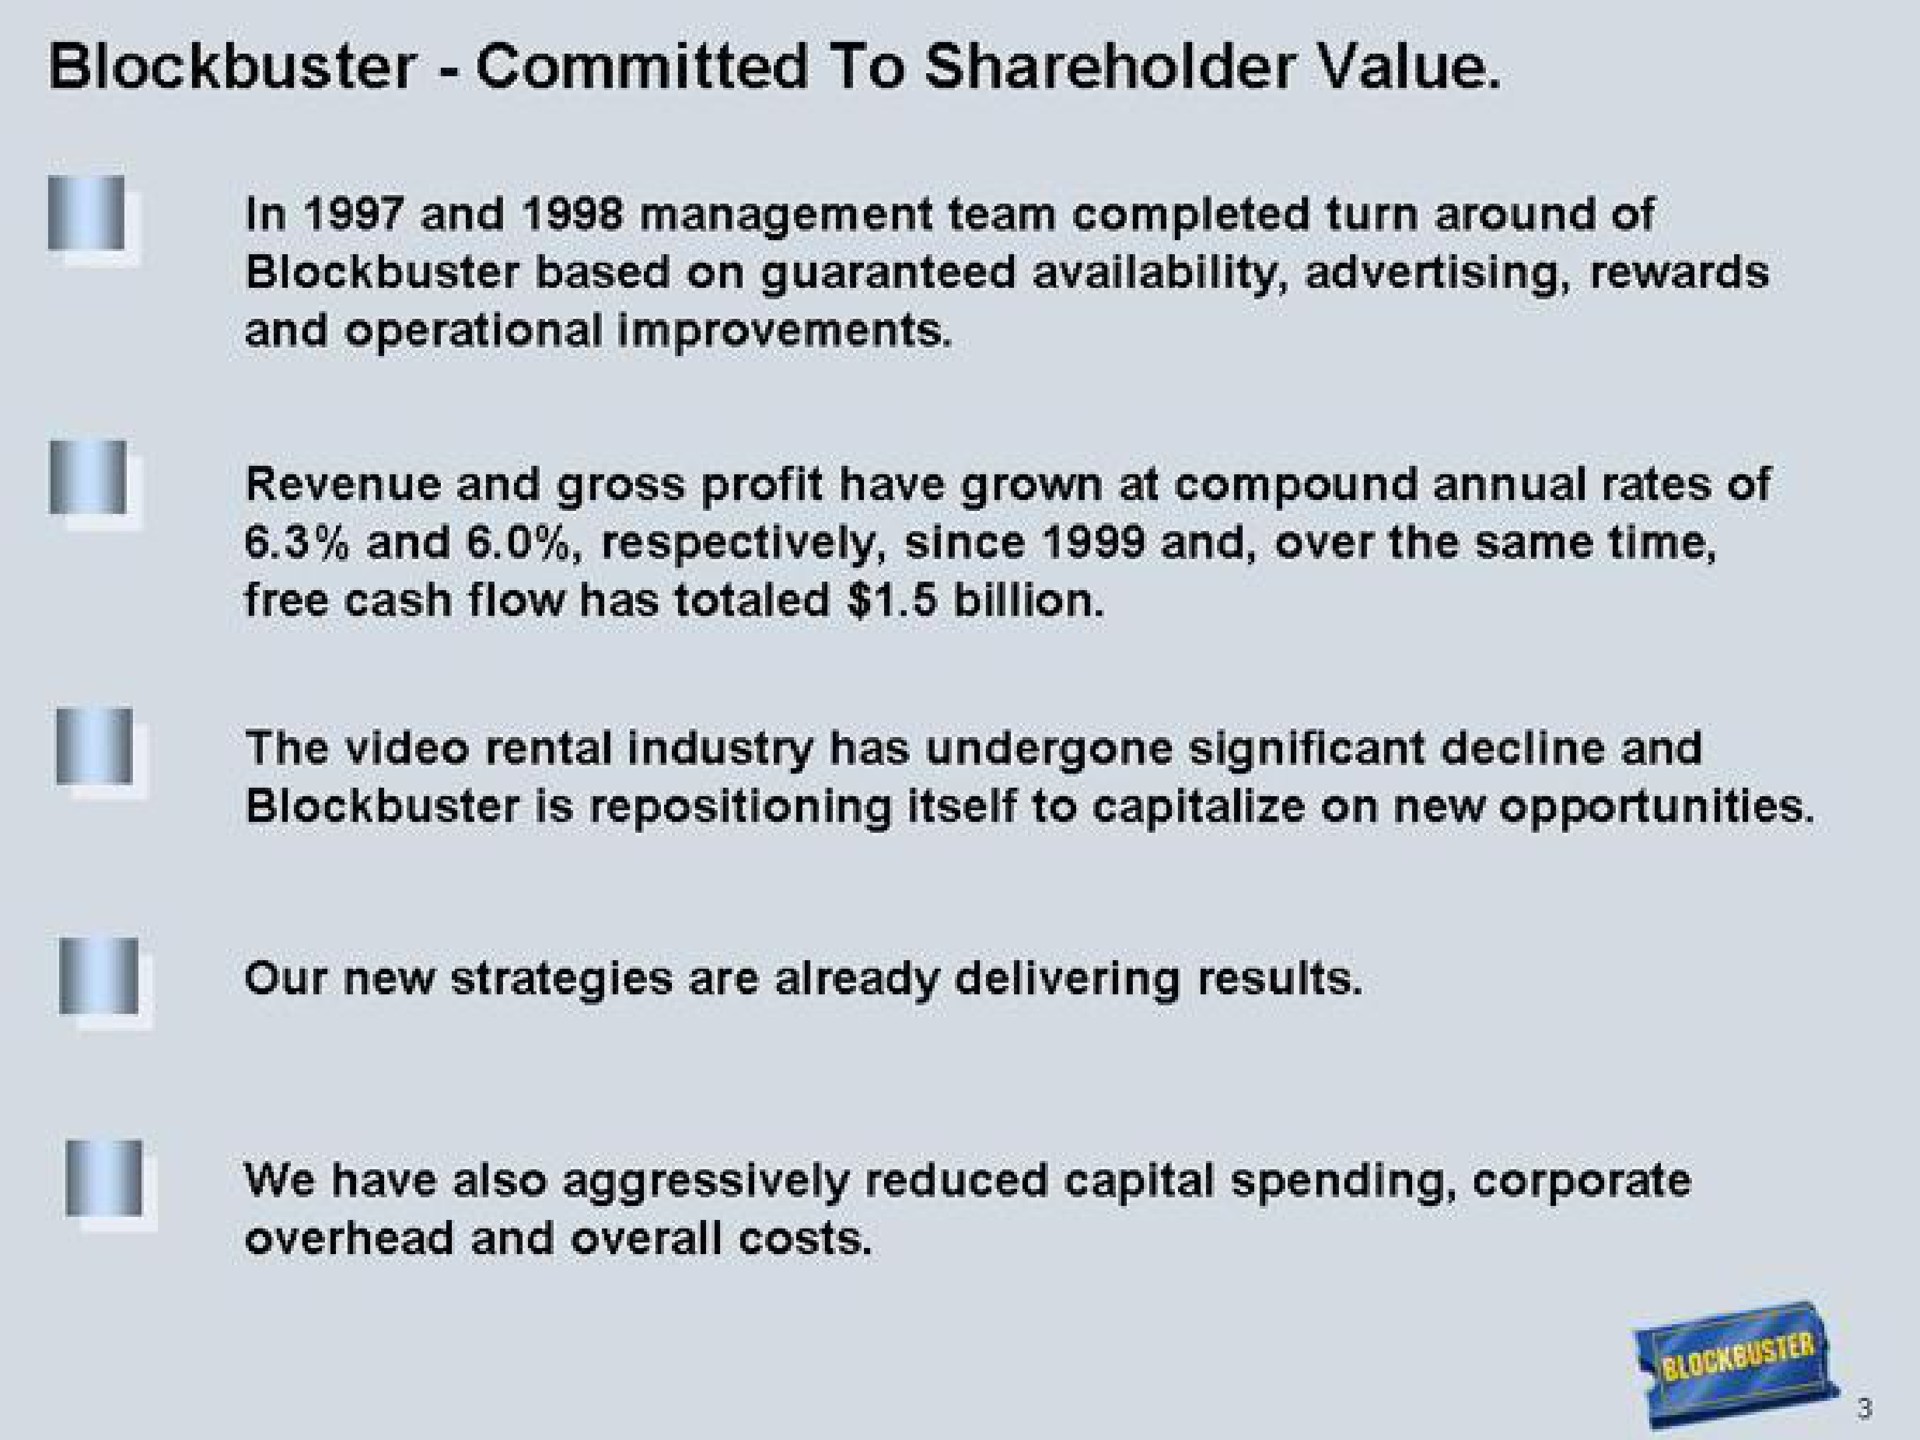 blockbuster committed to shareholder value | Blockbuster Video